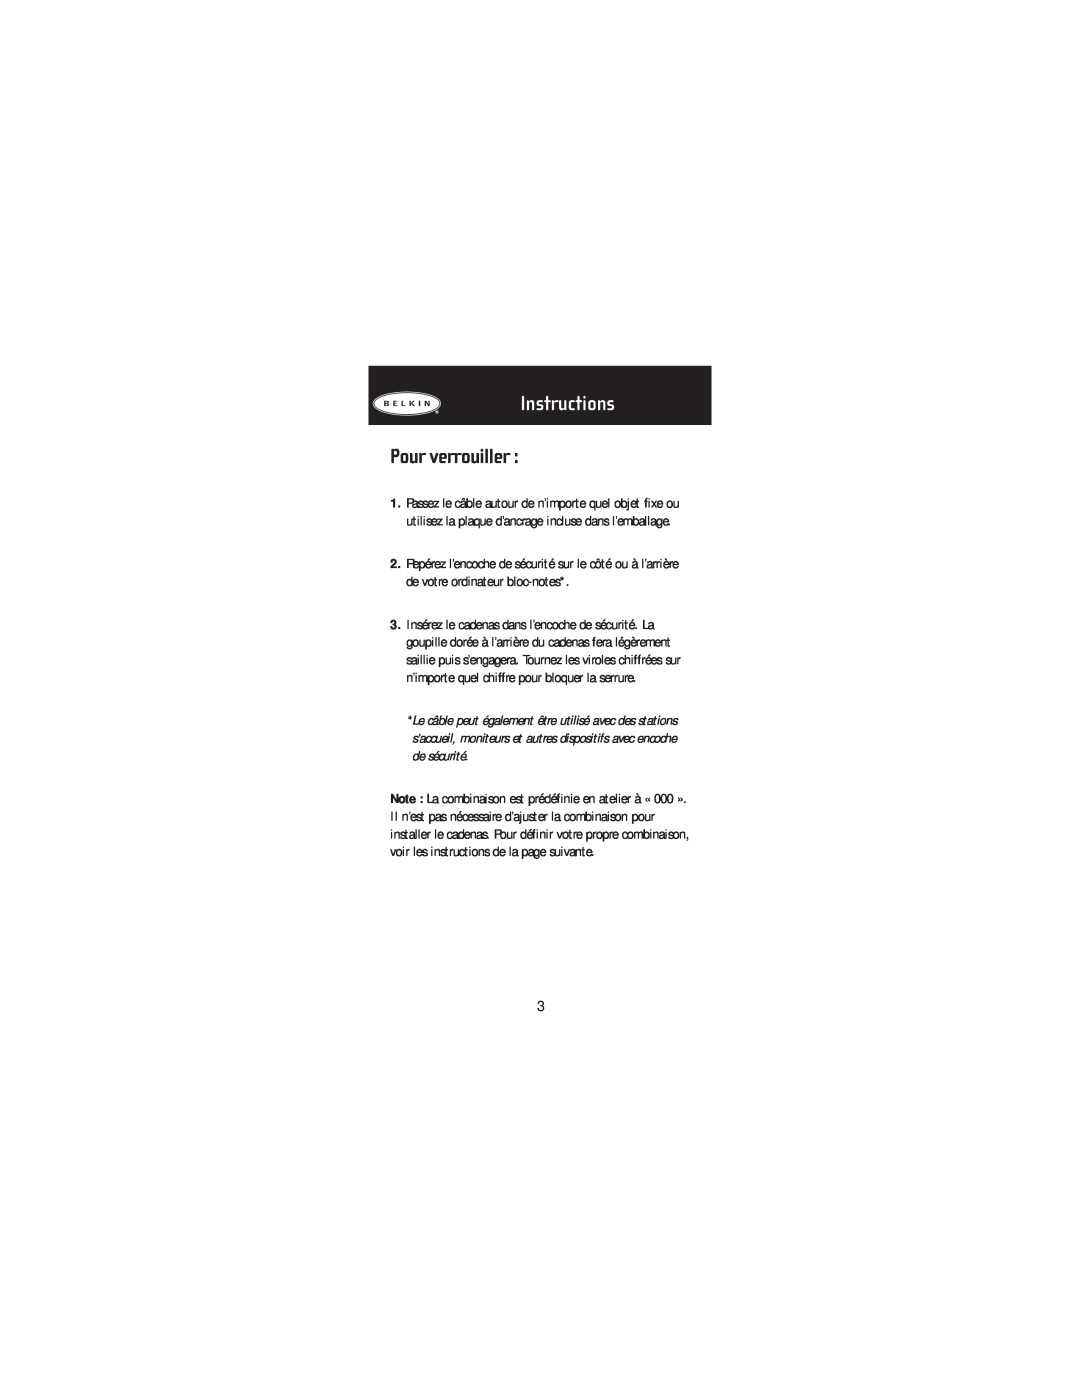 Belkin F8E503, P74101tt manual Instructions, Pour verrouiller 